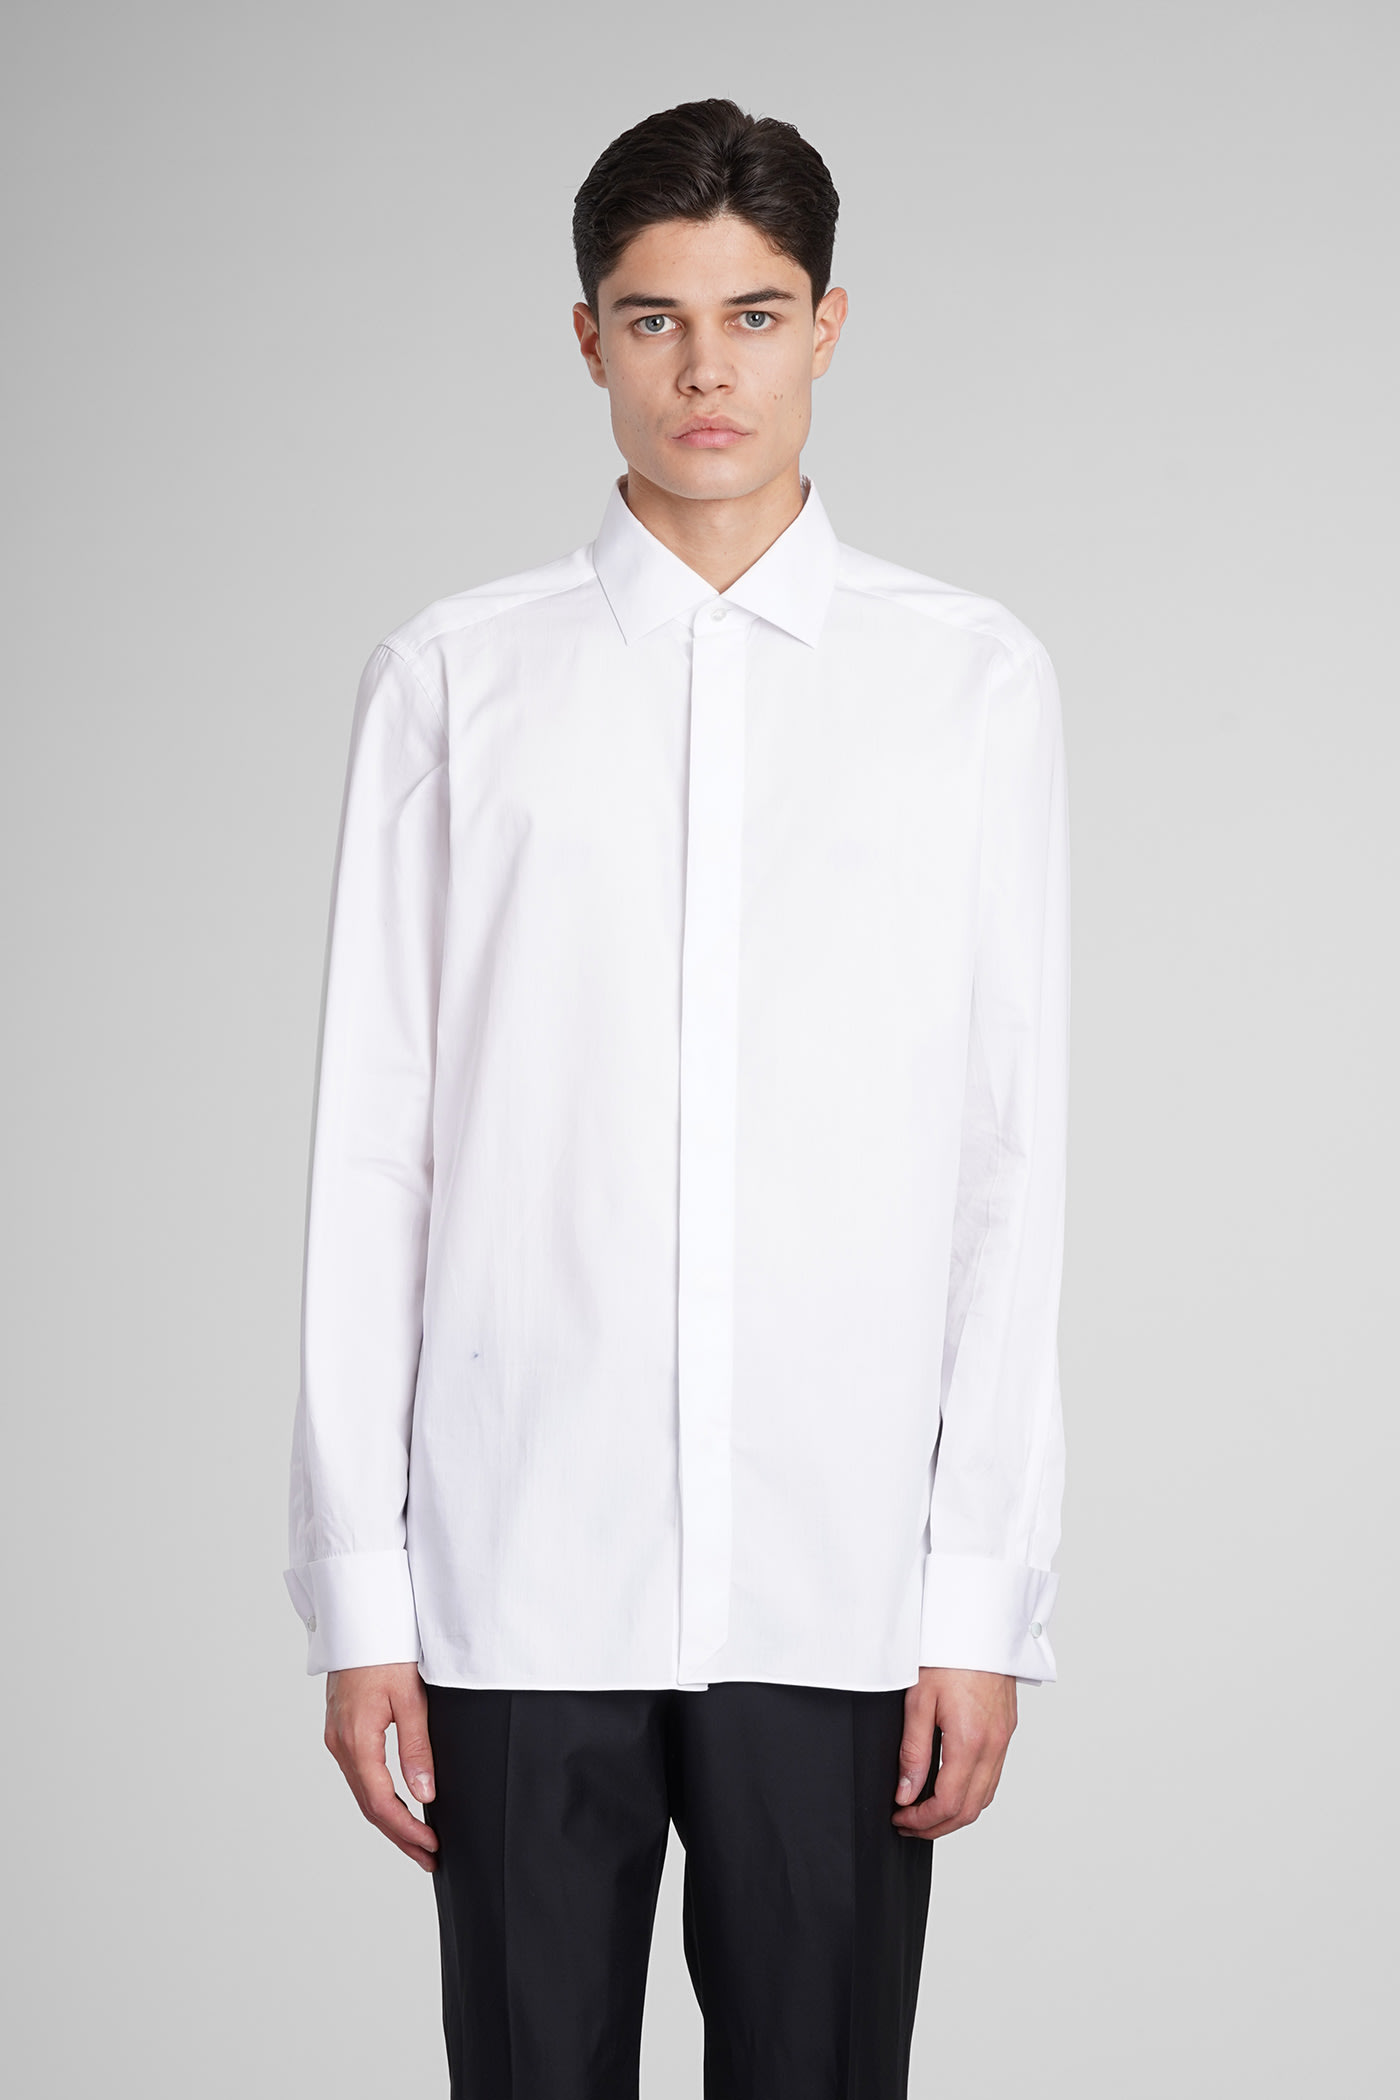 Zegna Shirt In White Cotton